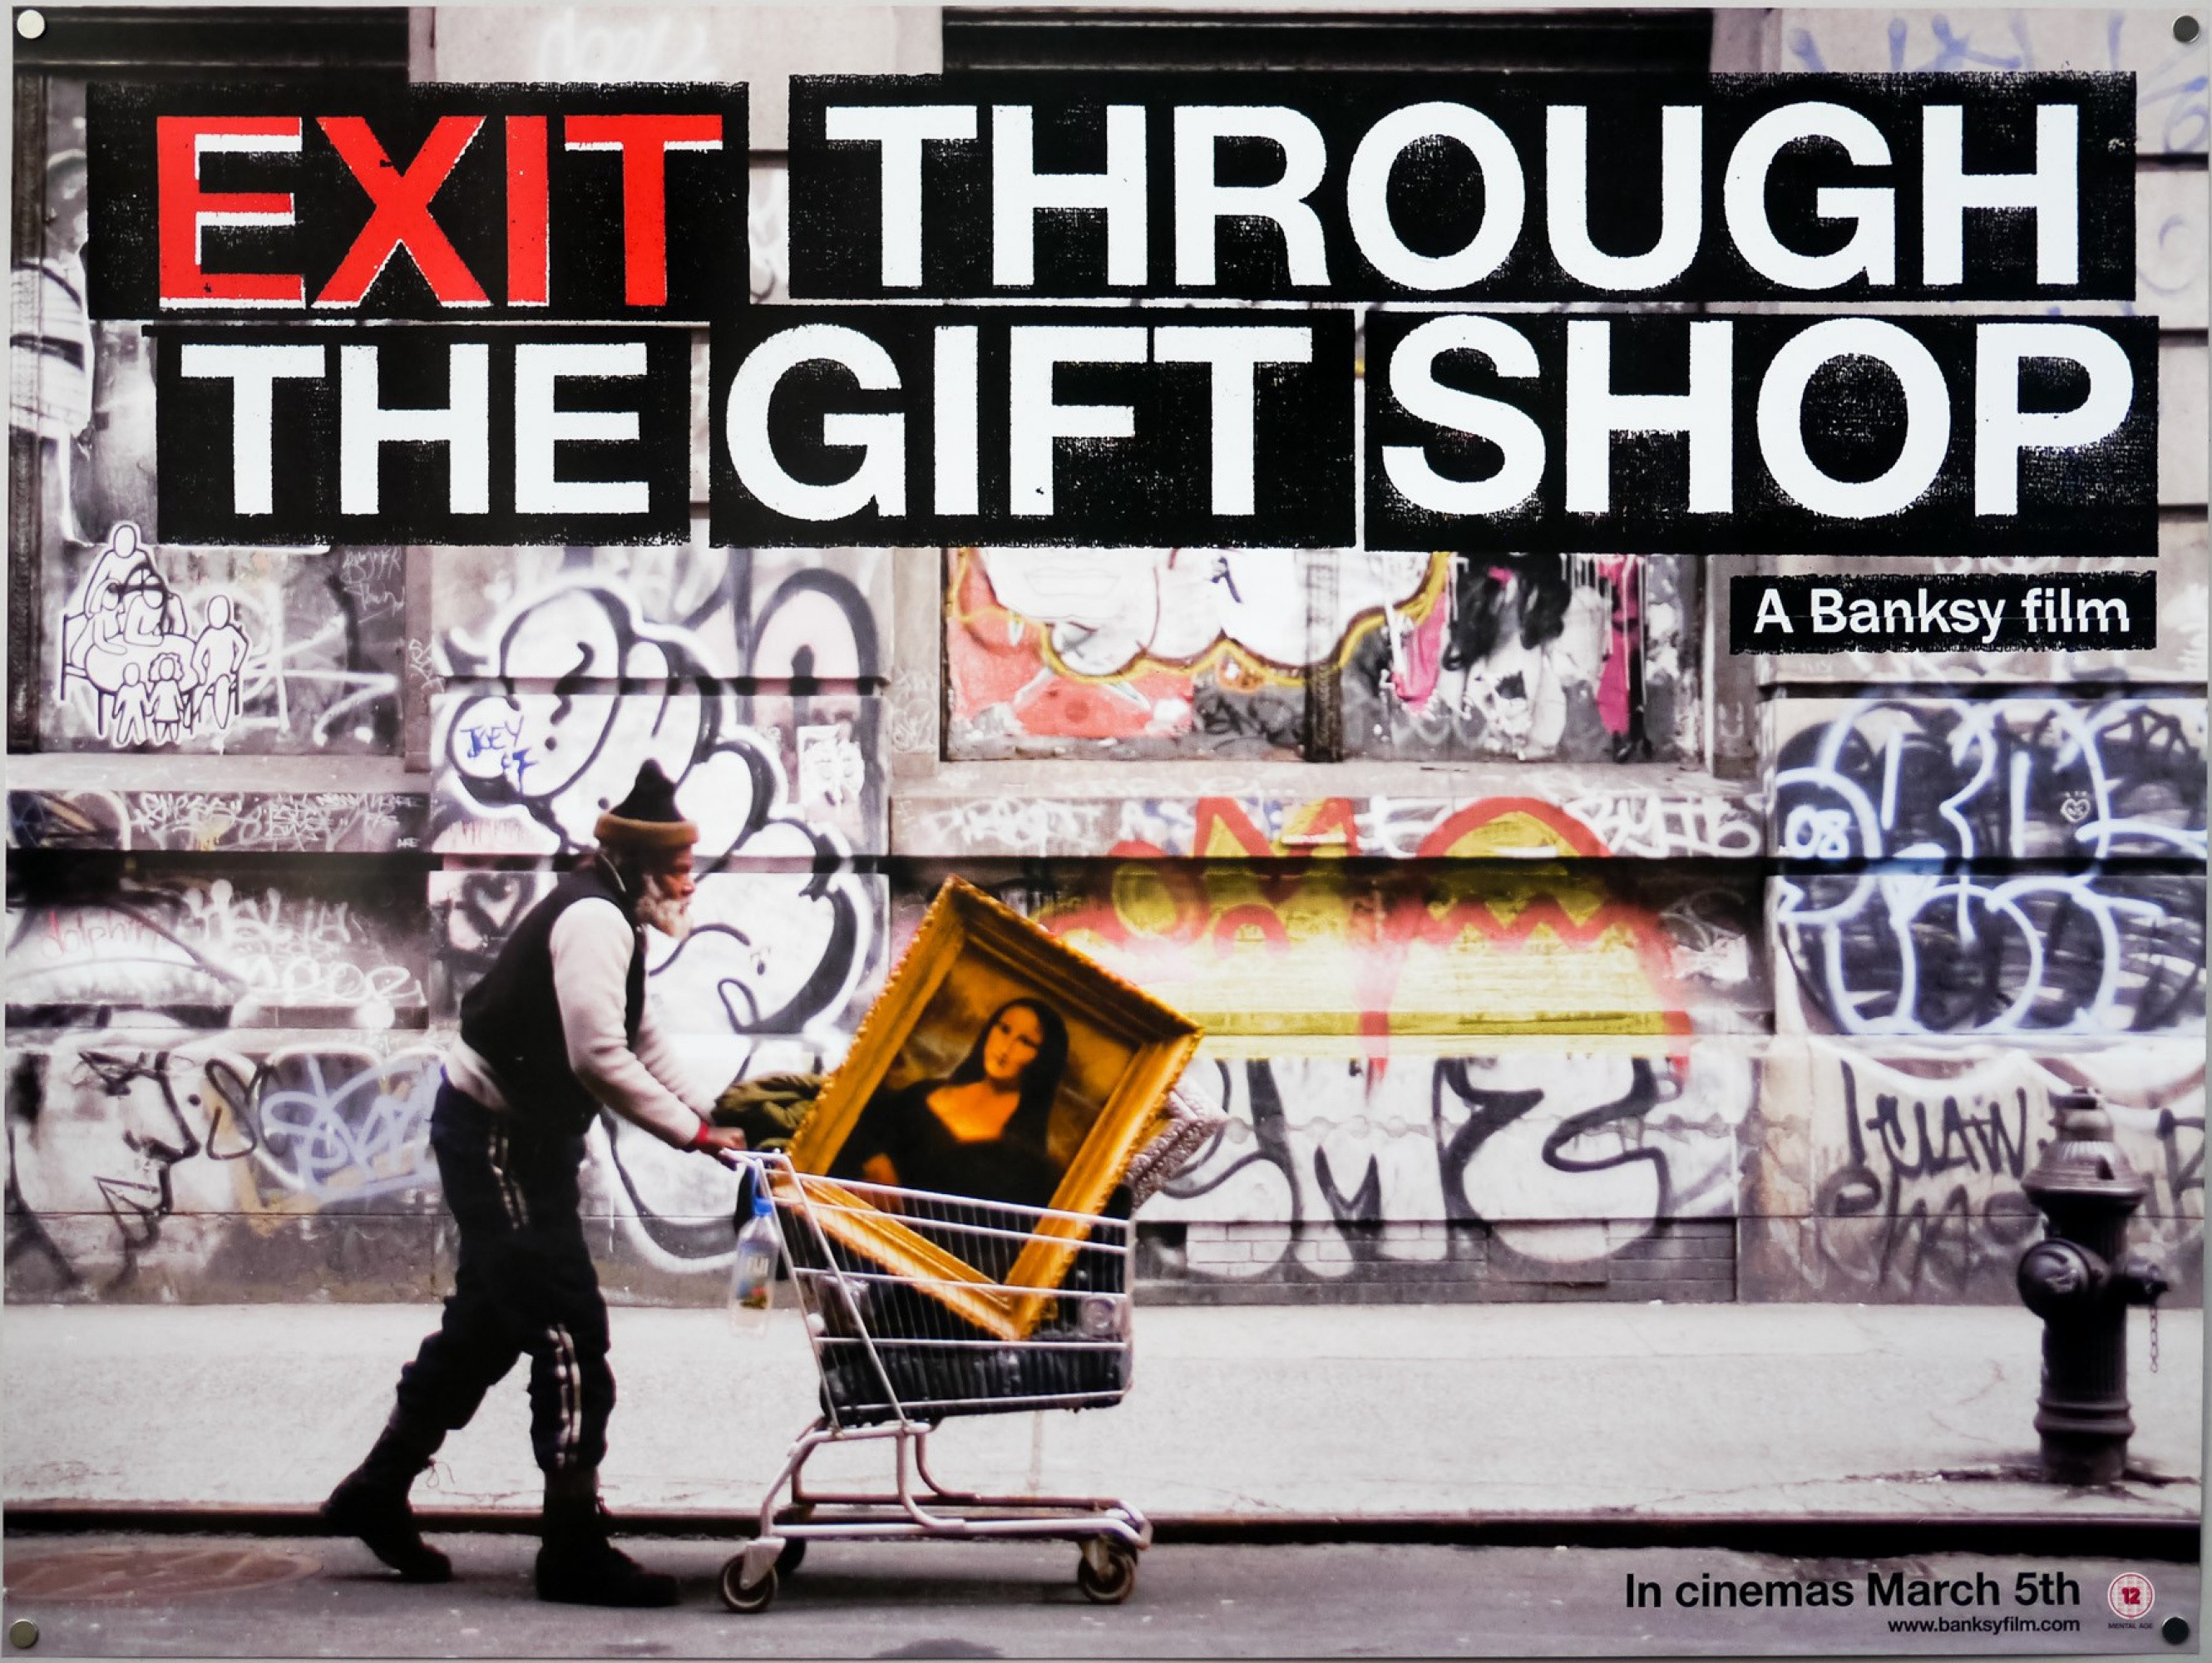 Penyuka street art pasti lo kenal dengan Bansky. Film “Exit Through the Gift Shop” cocok banget ditonton buat lo penyuka street art. (Sumber: Arthive)